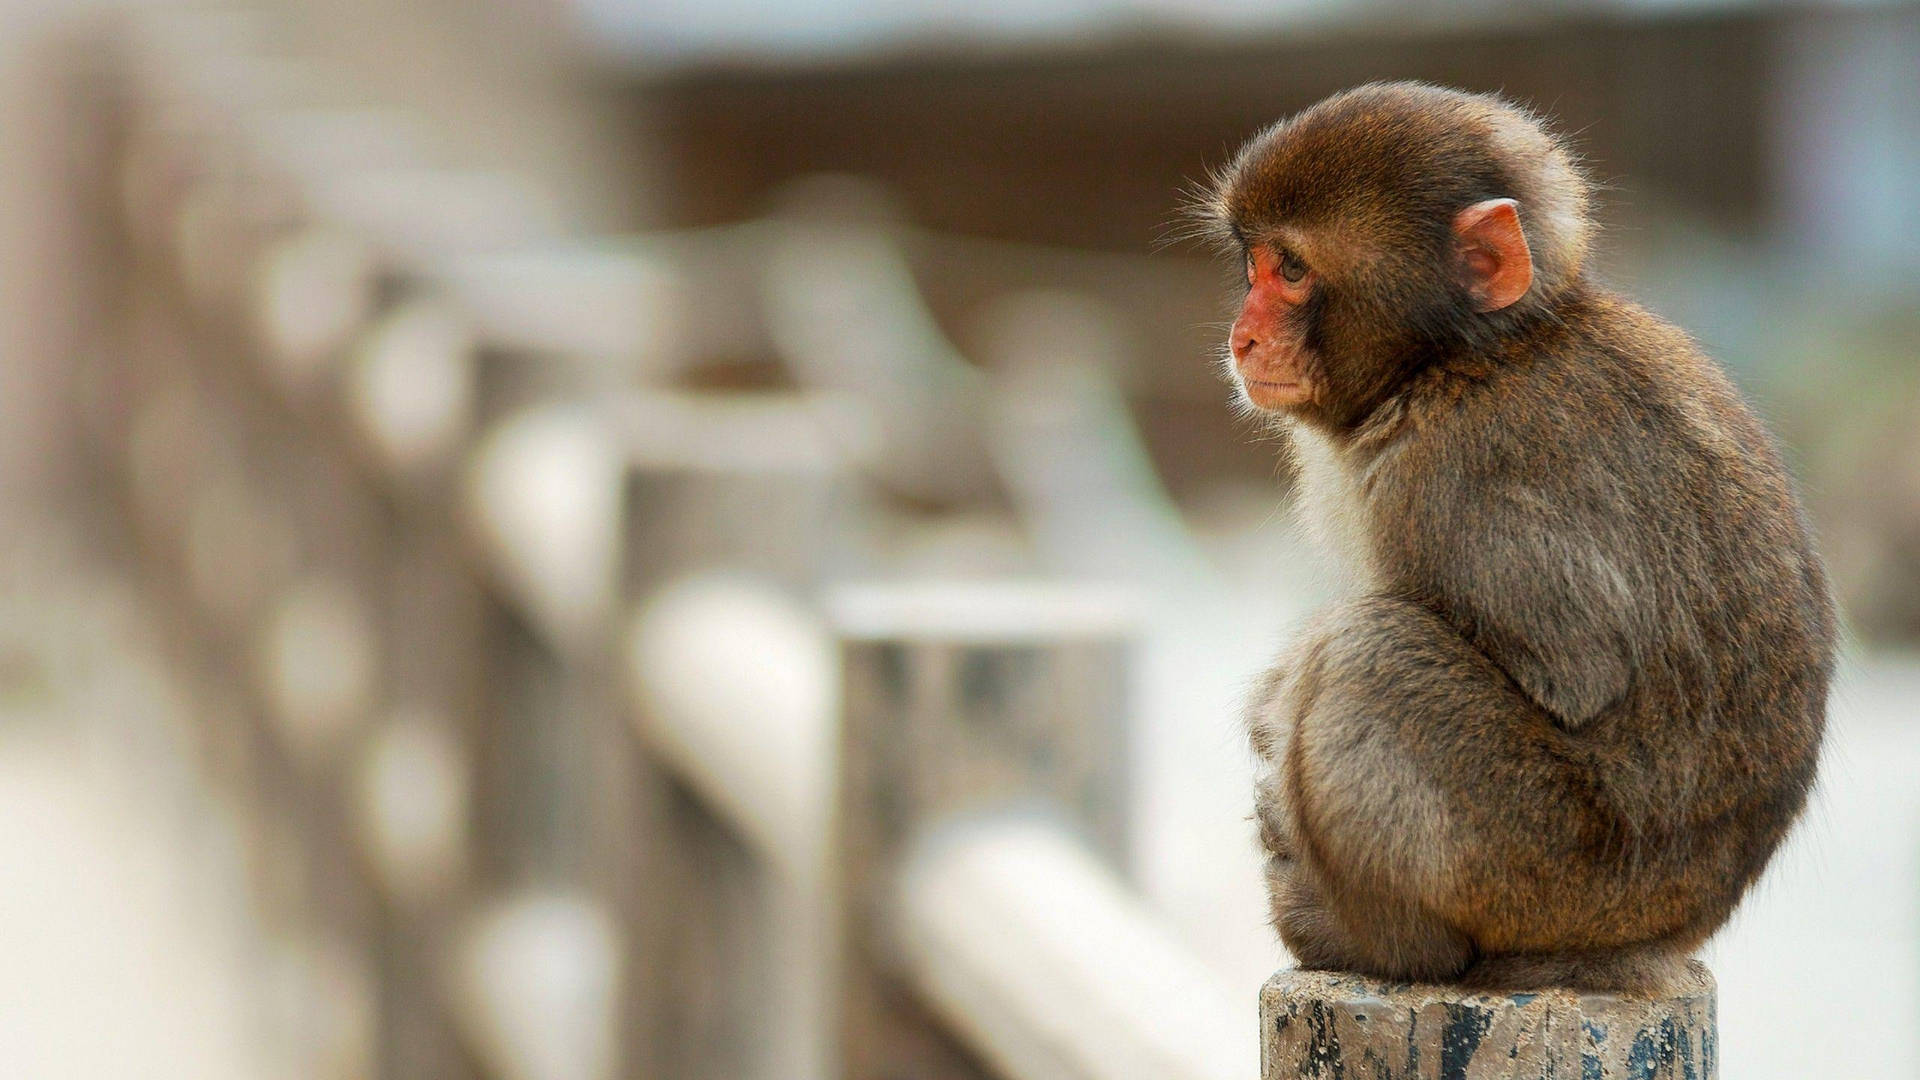 Cute Monkey On A Bridge Background